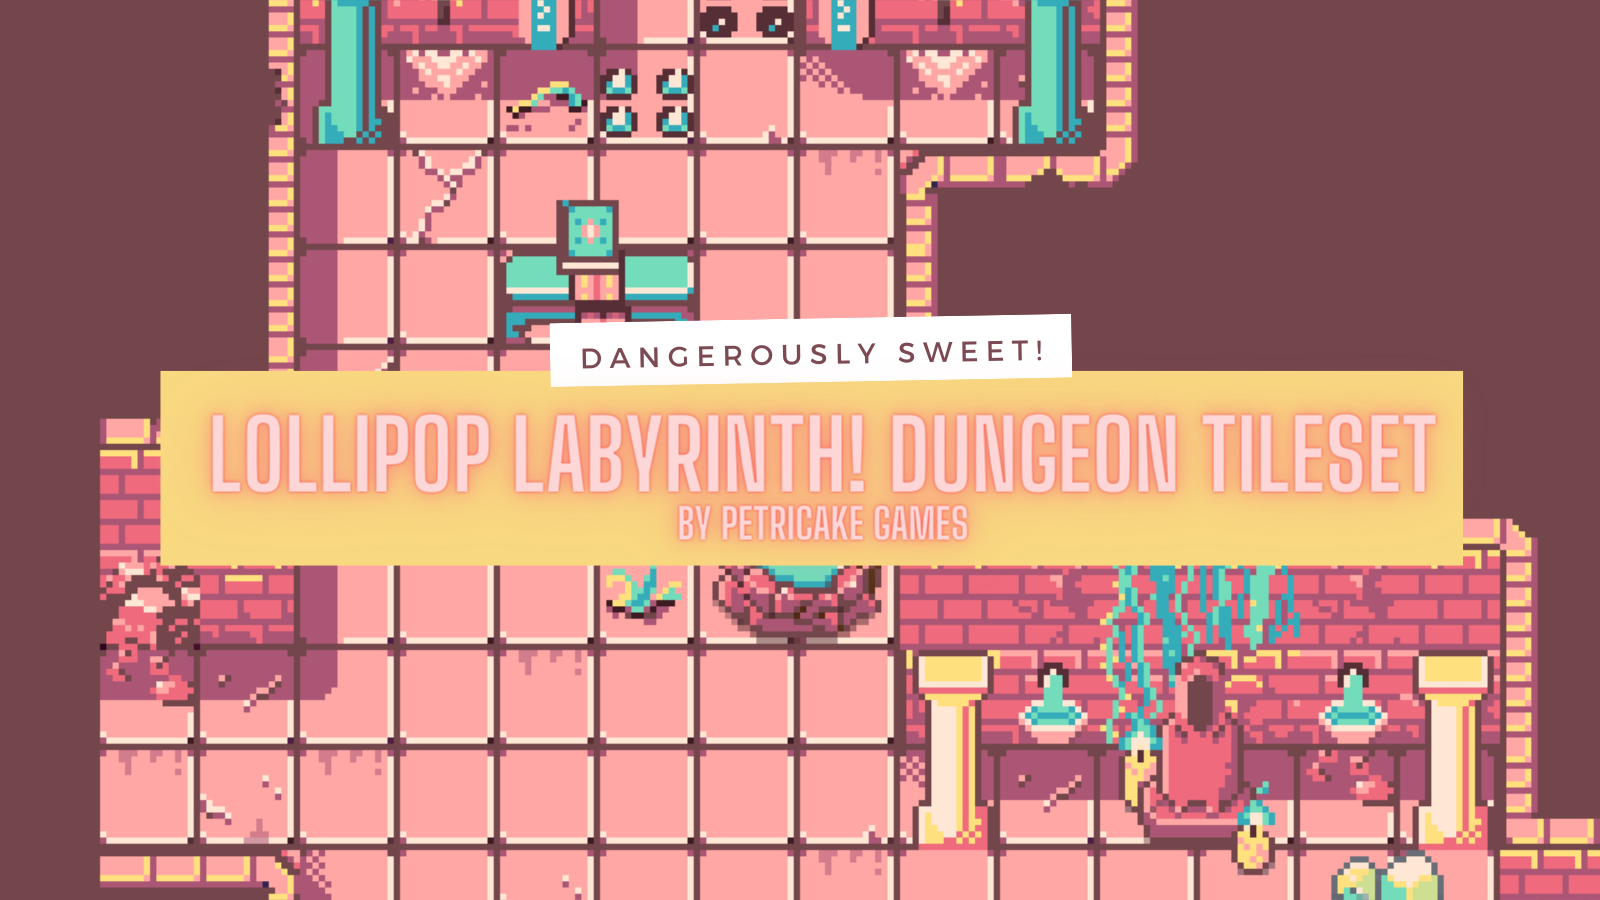 Lollipop Labyrinth! Dungeon Tileset